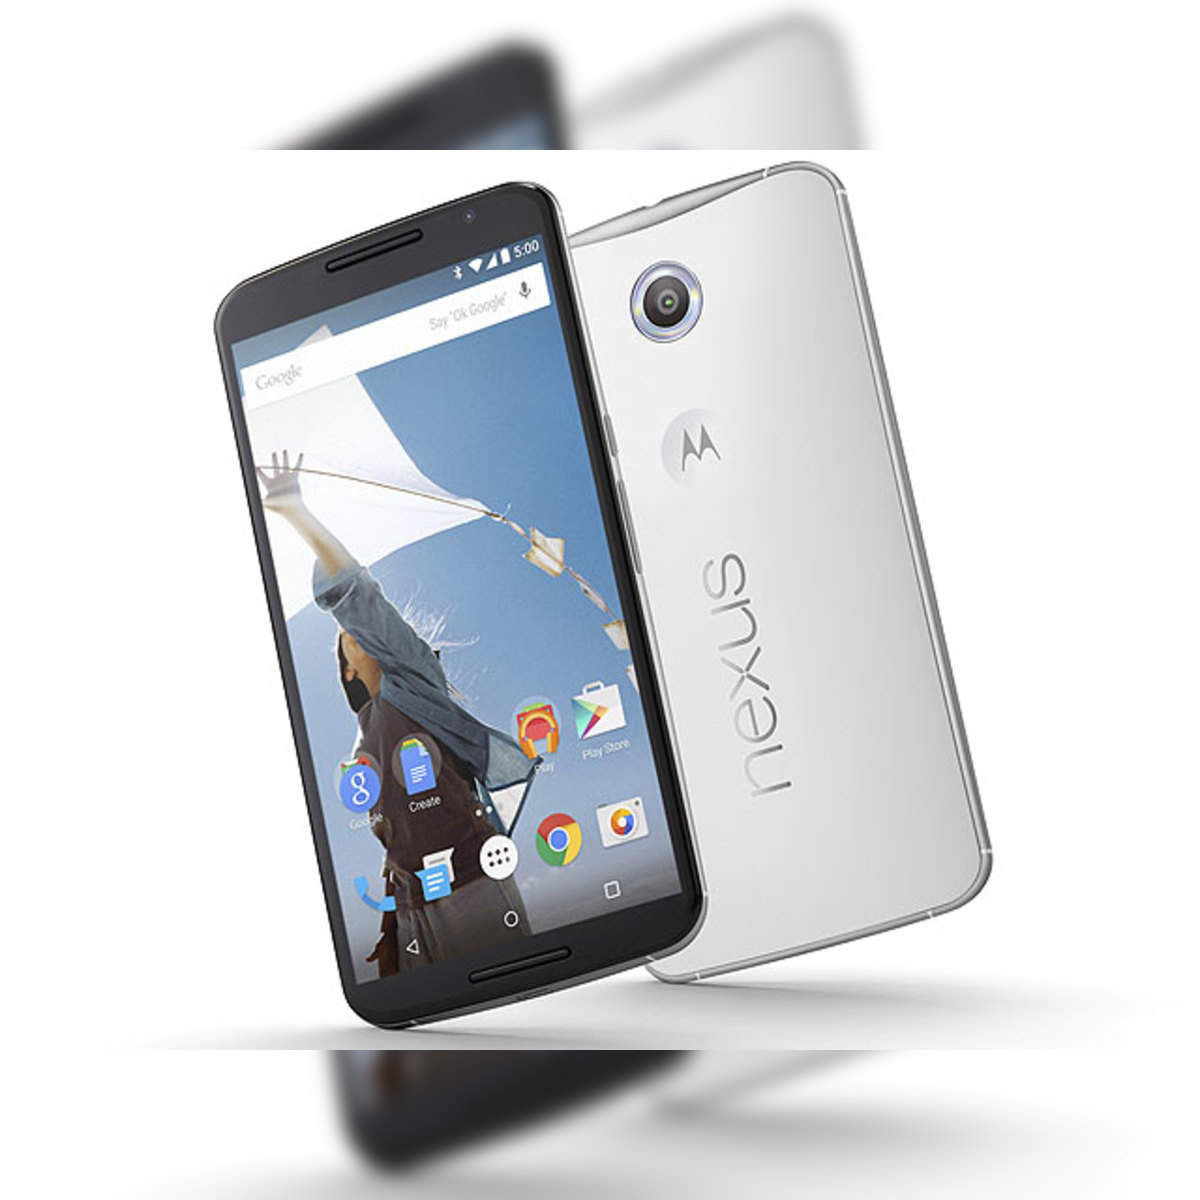 Gadget Review: Google Nexus 6 - The Economic Times